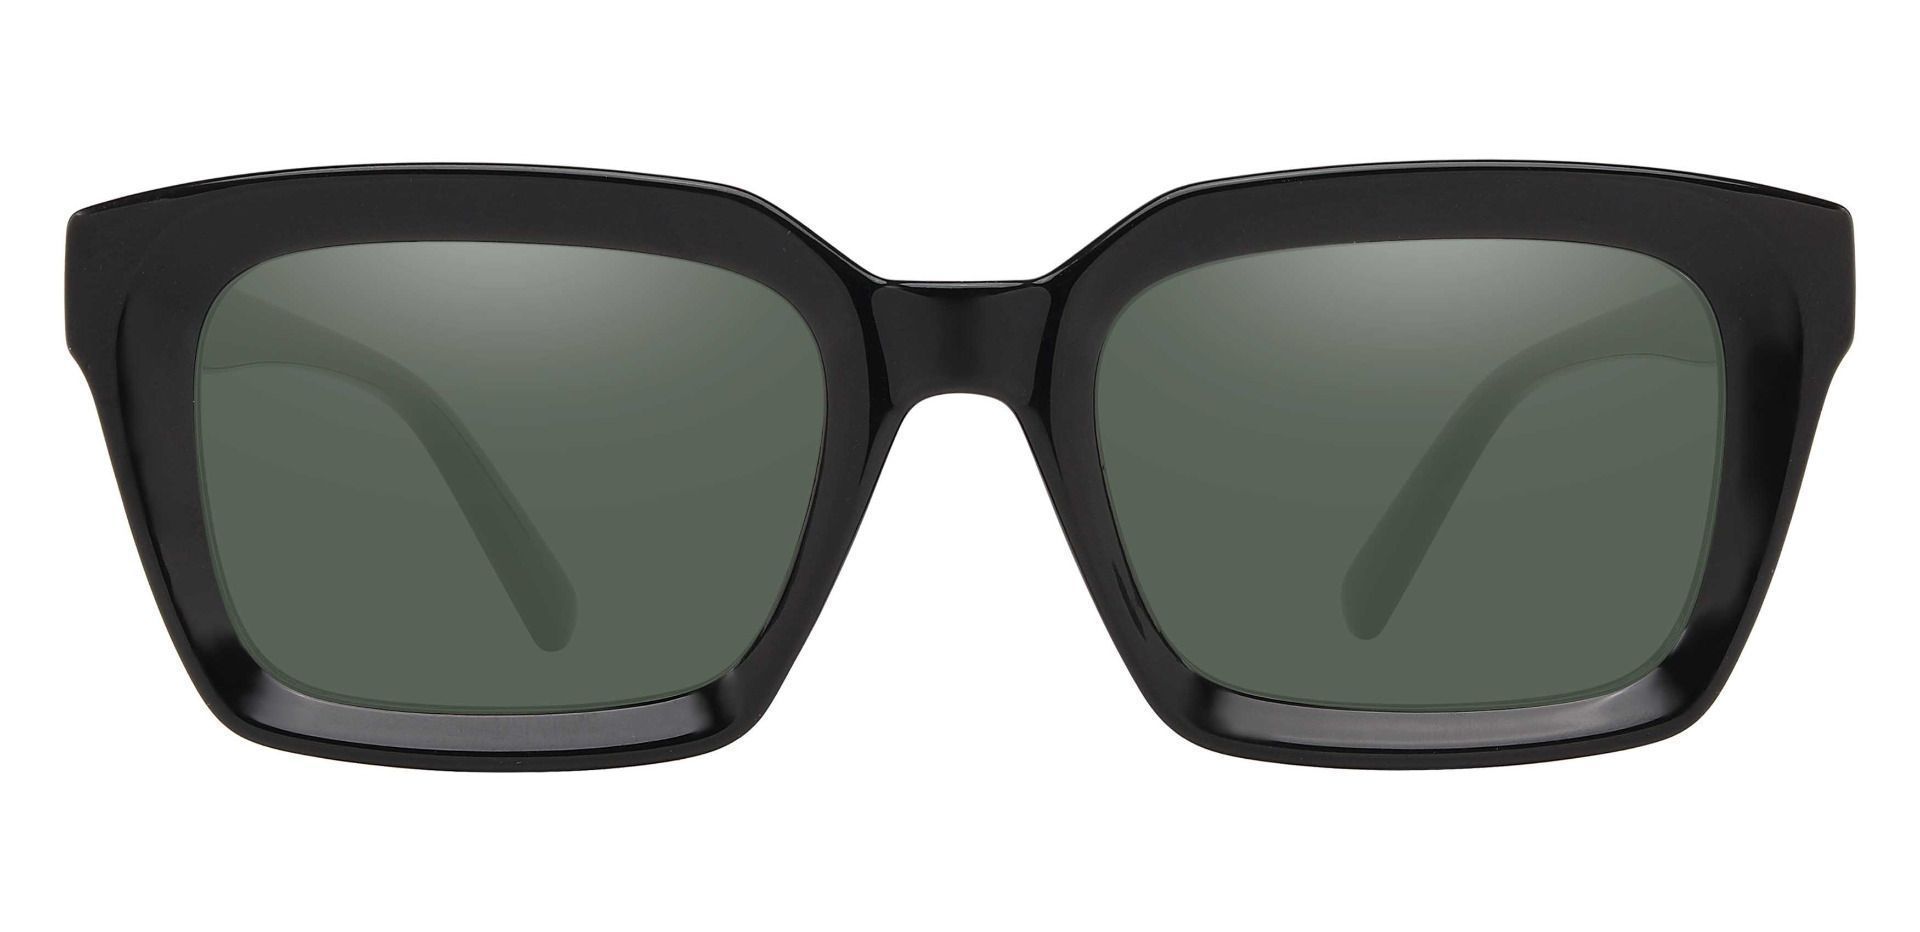 Unity Rectangle Progressive Sunglasses - Black Frame With Green Lenses